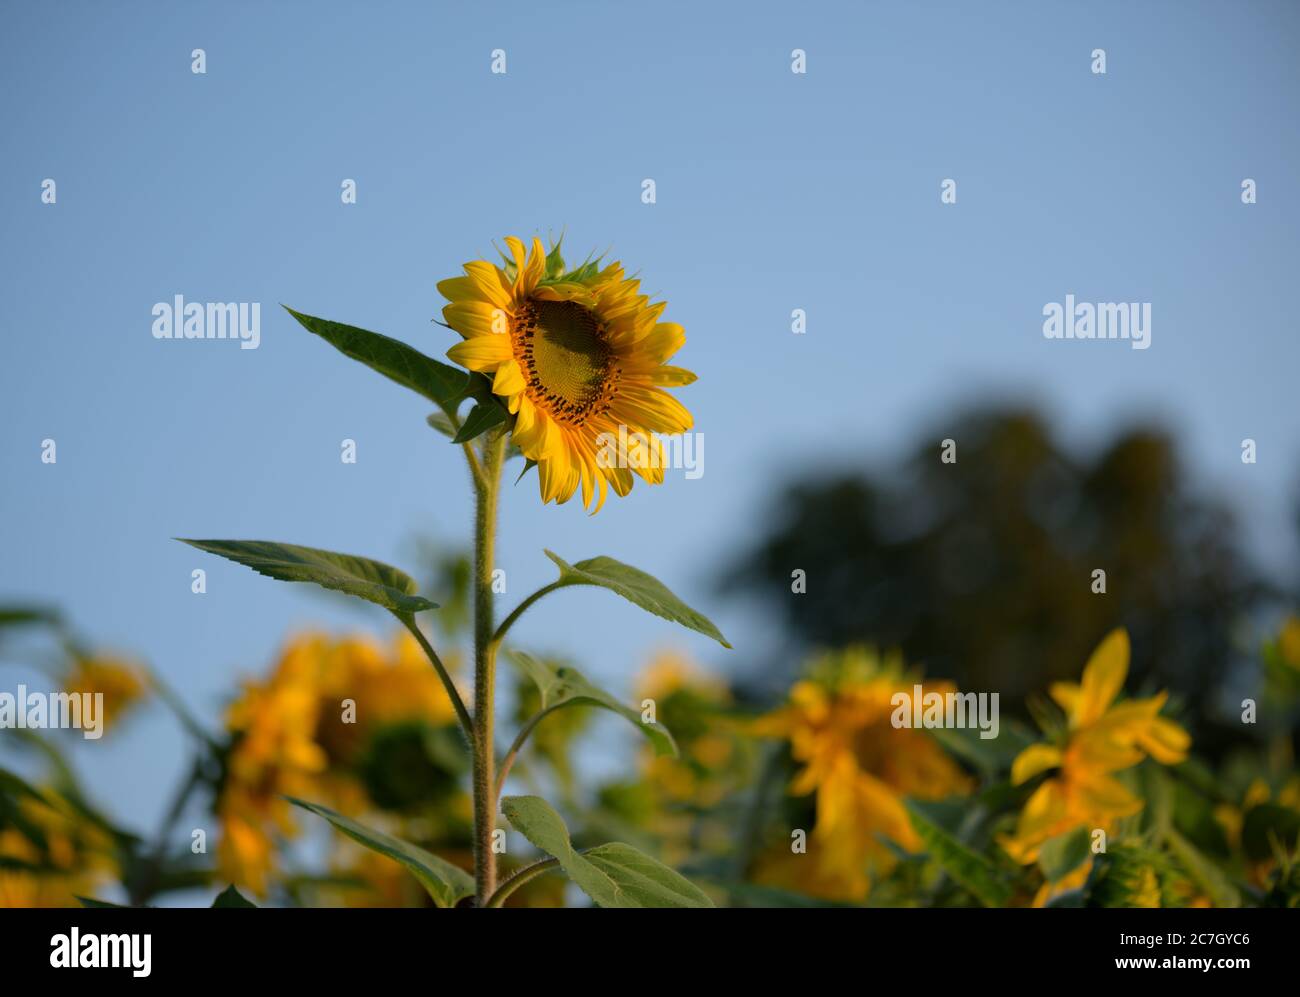 The Sunflower Stock Photo